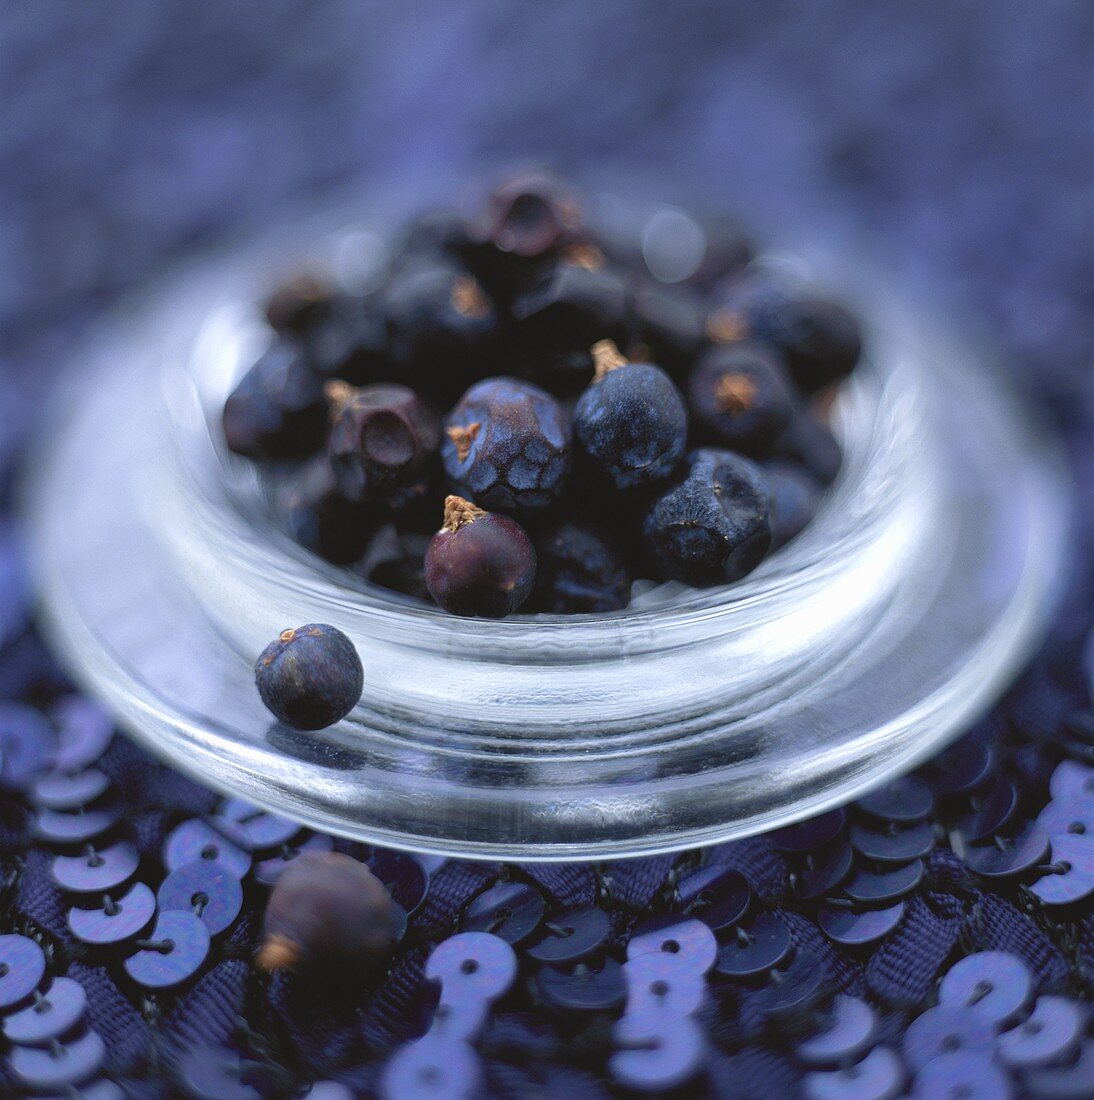 Juniper berries in a small glass bowl